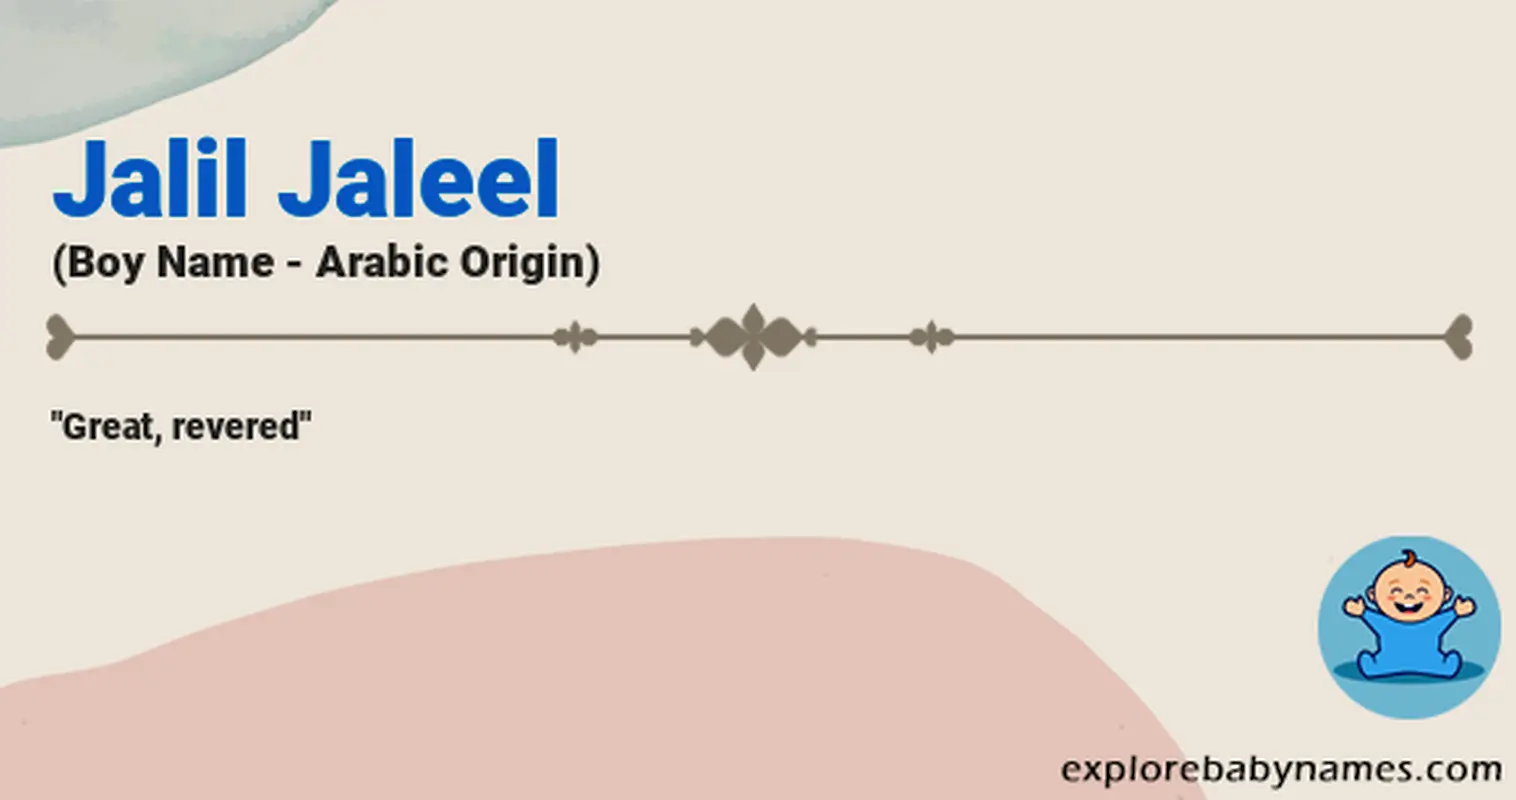 Meaning of Jalil Jaleel